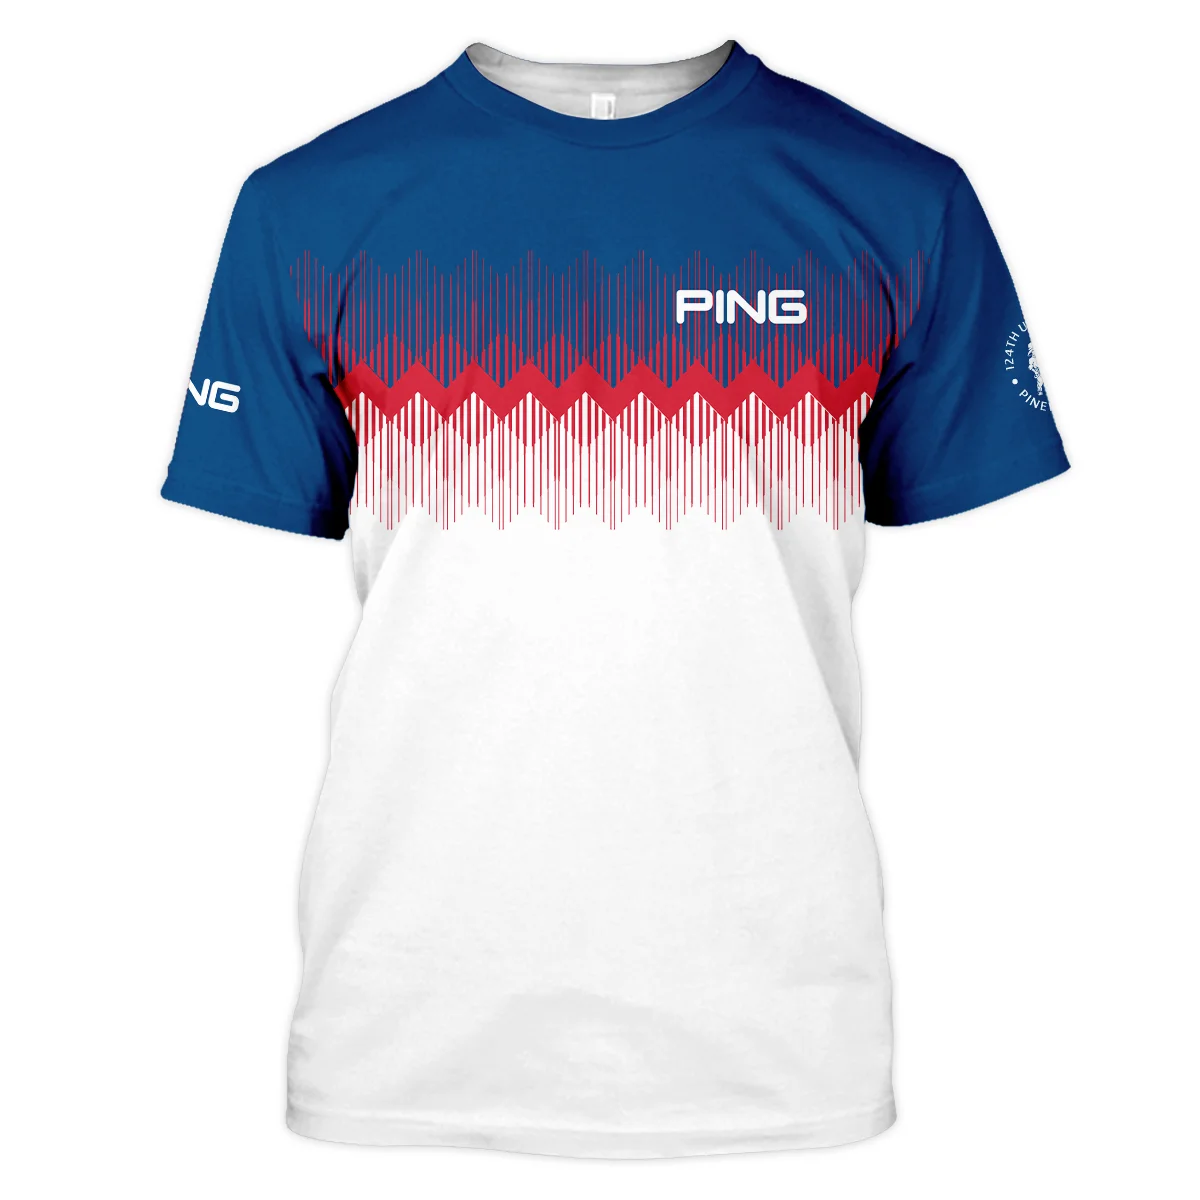 Ping 124th U.S. Open Pinehurst Unisex T-Shirt Blue Red Fabric Pattern Golf T-Shirt